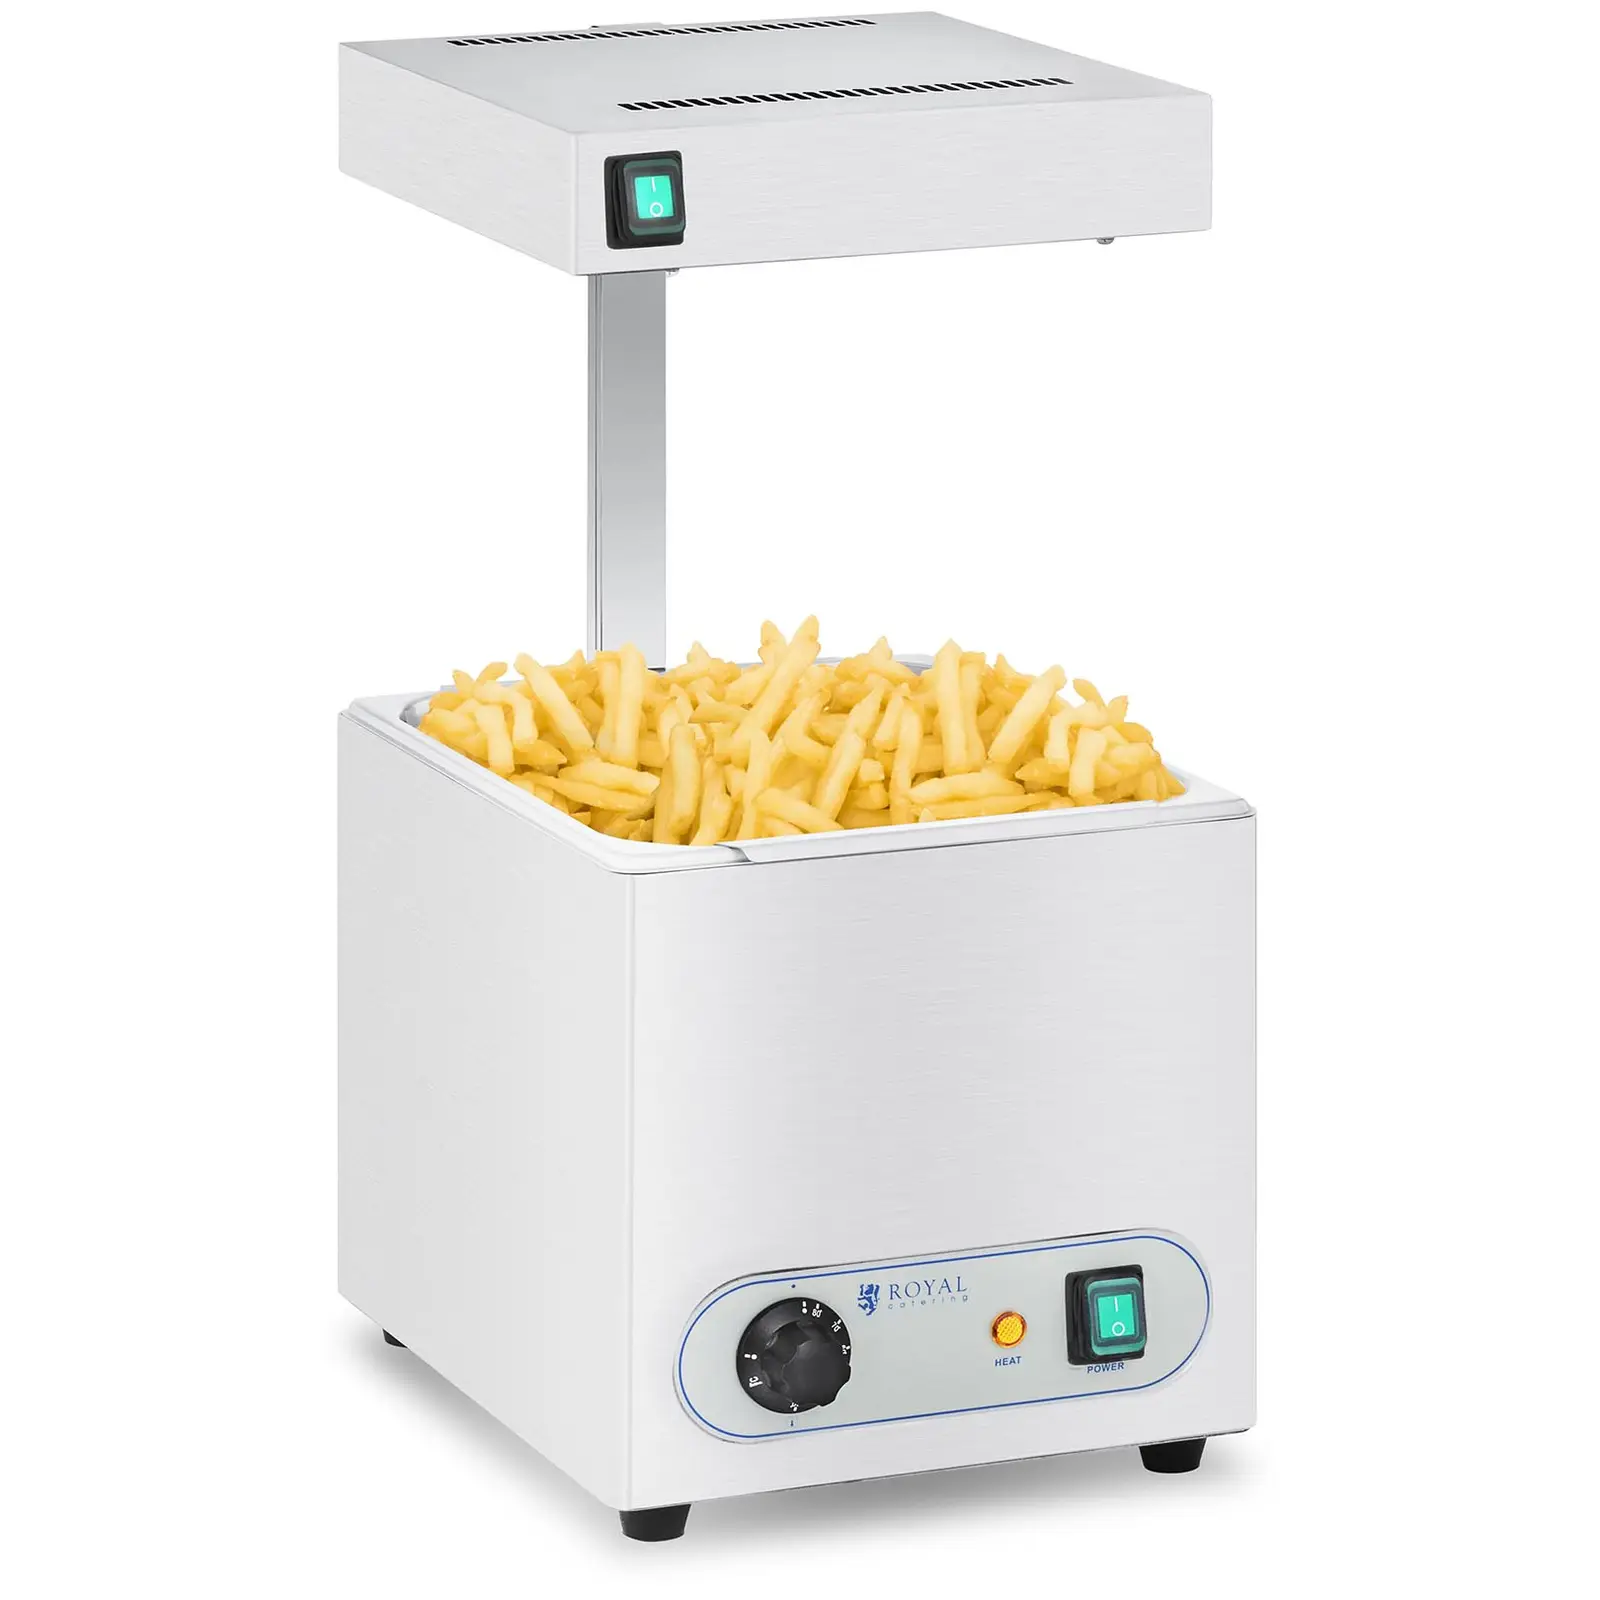 Pommes frites värmare - 850 W